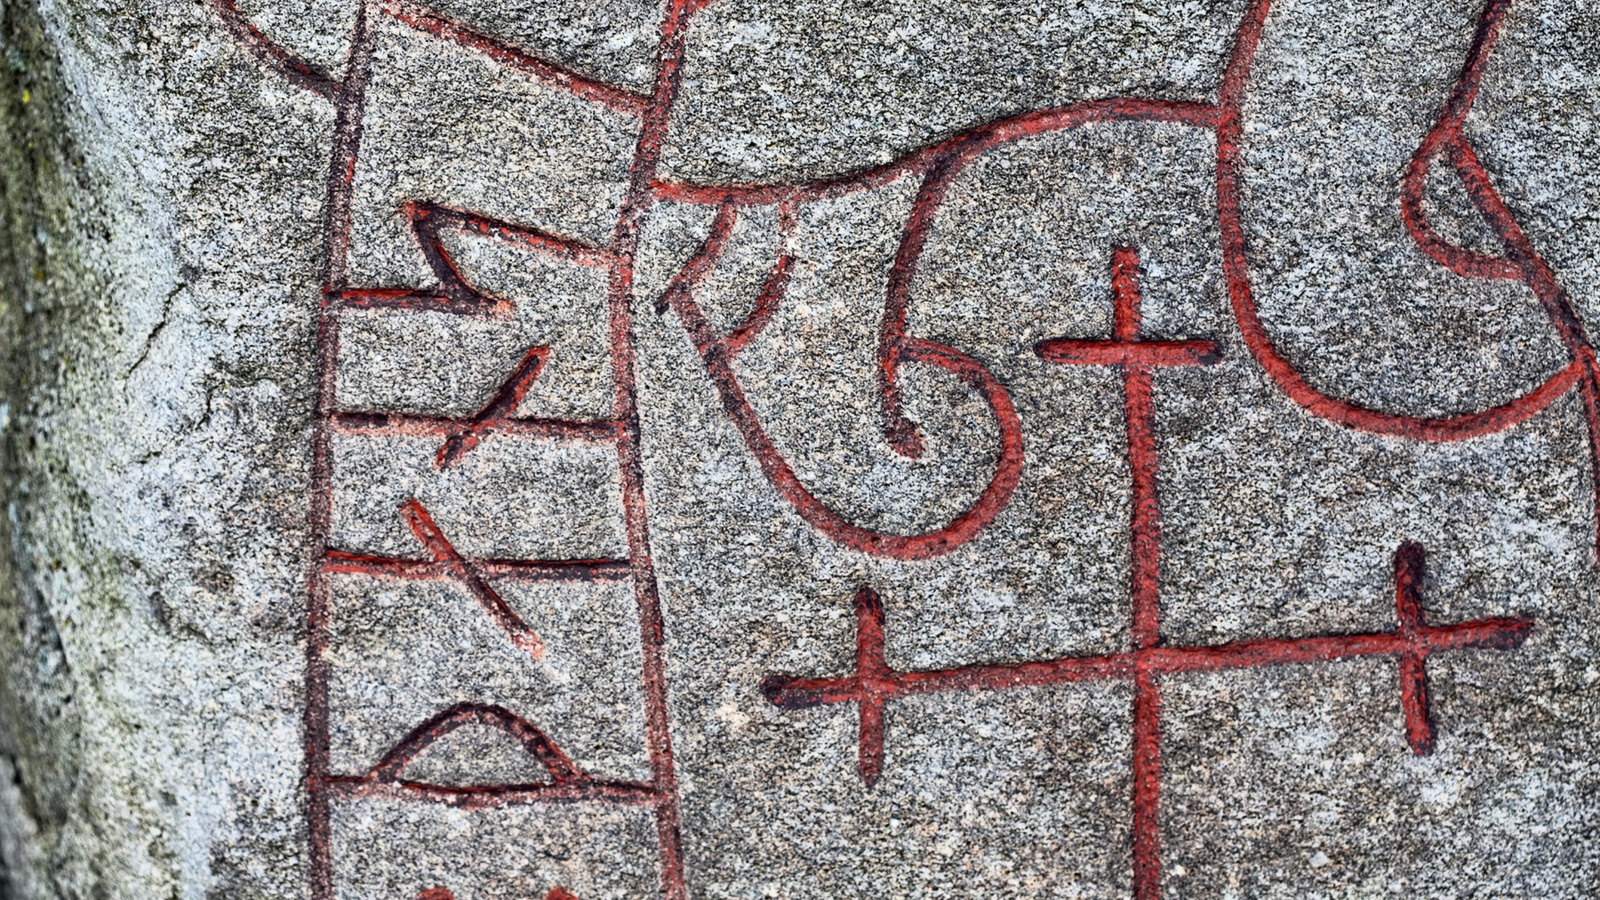 ancient viking symbols